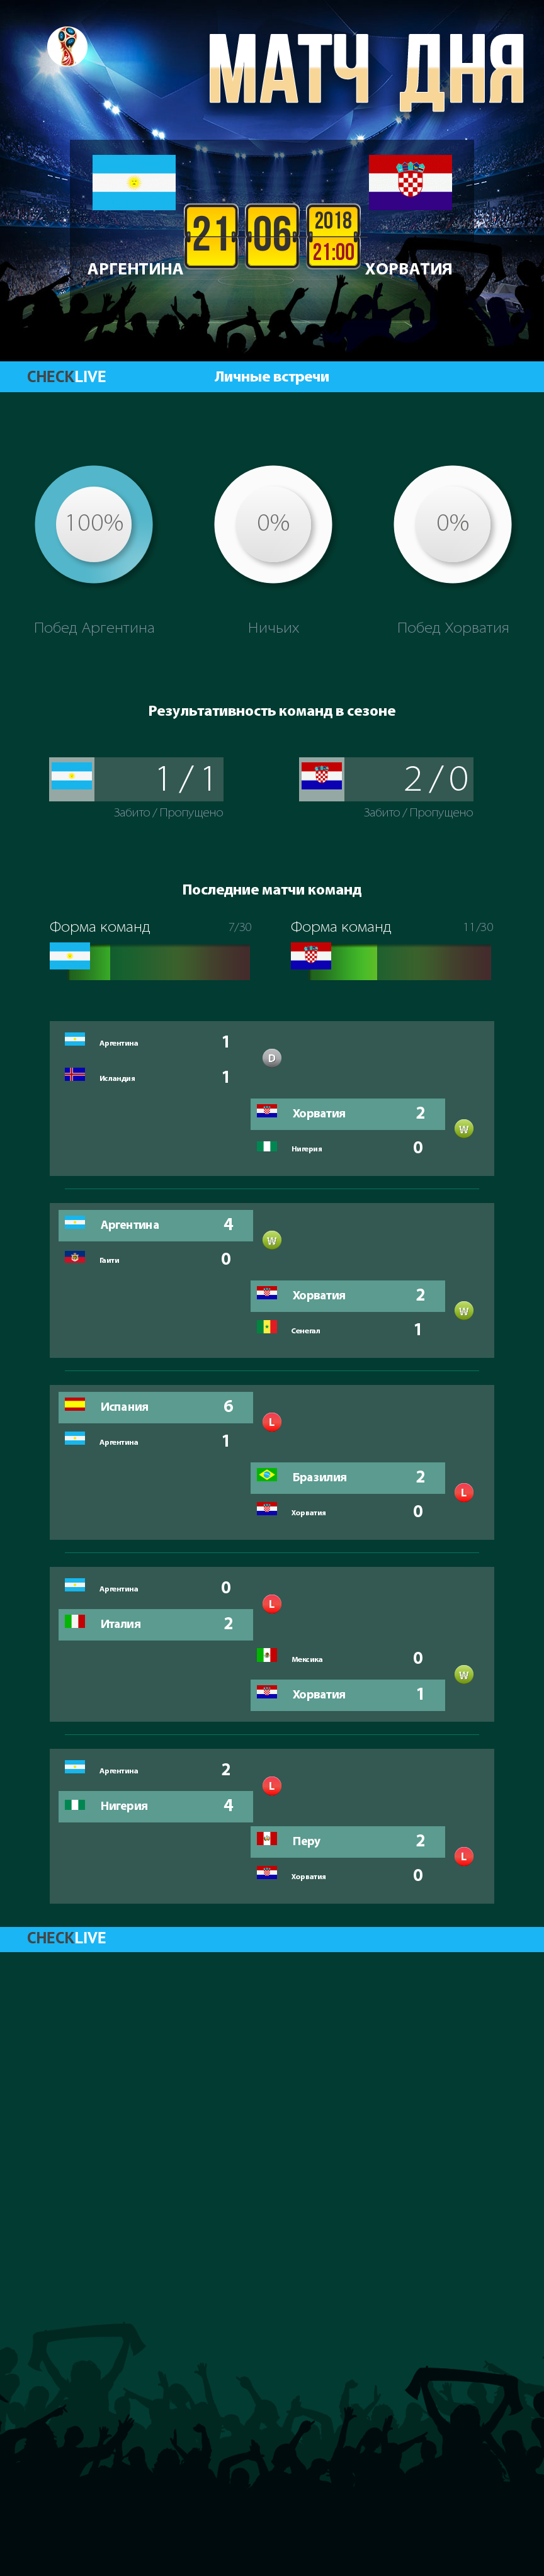 Инфографика Аргентина и Хорватия матч дня 21.06.2018